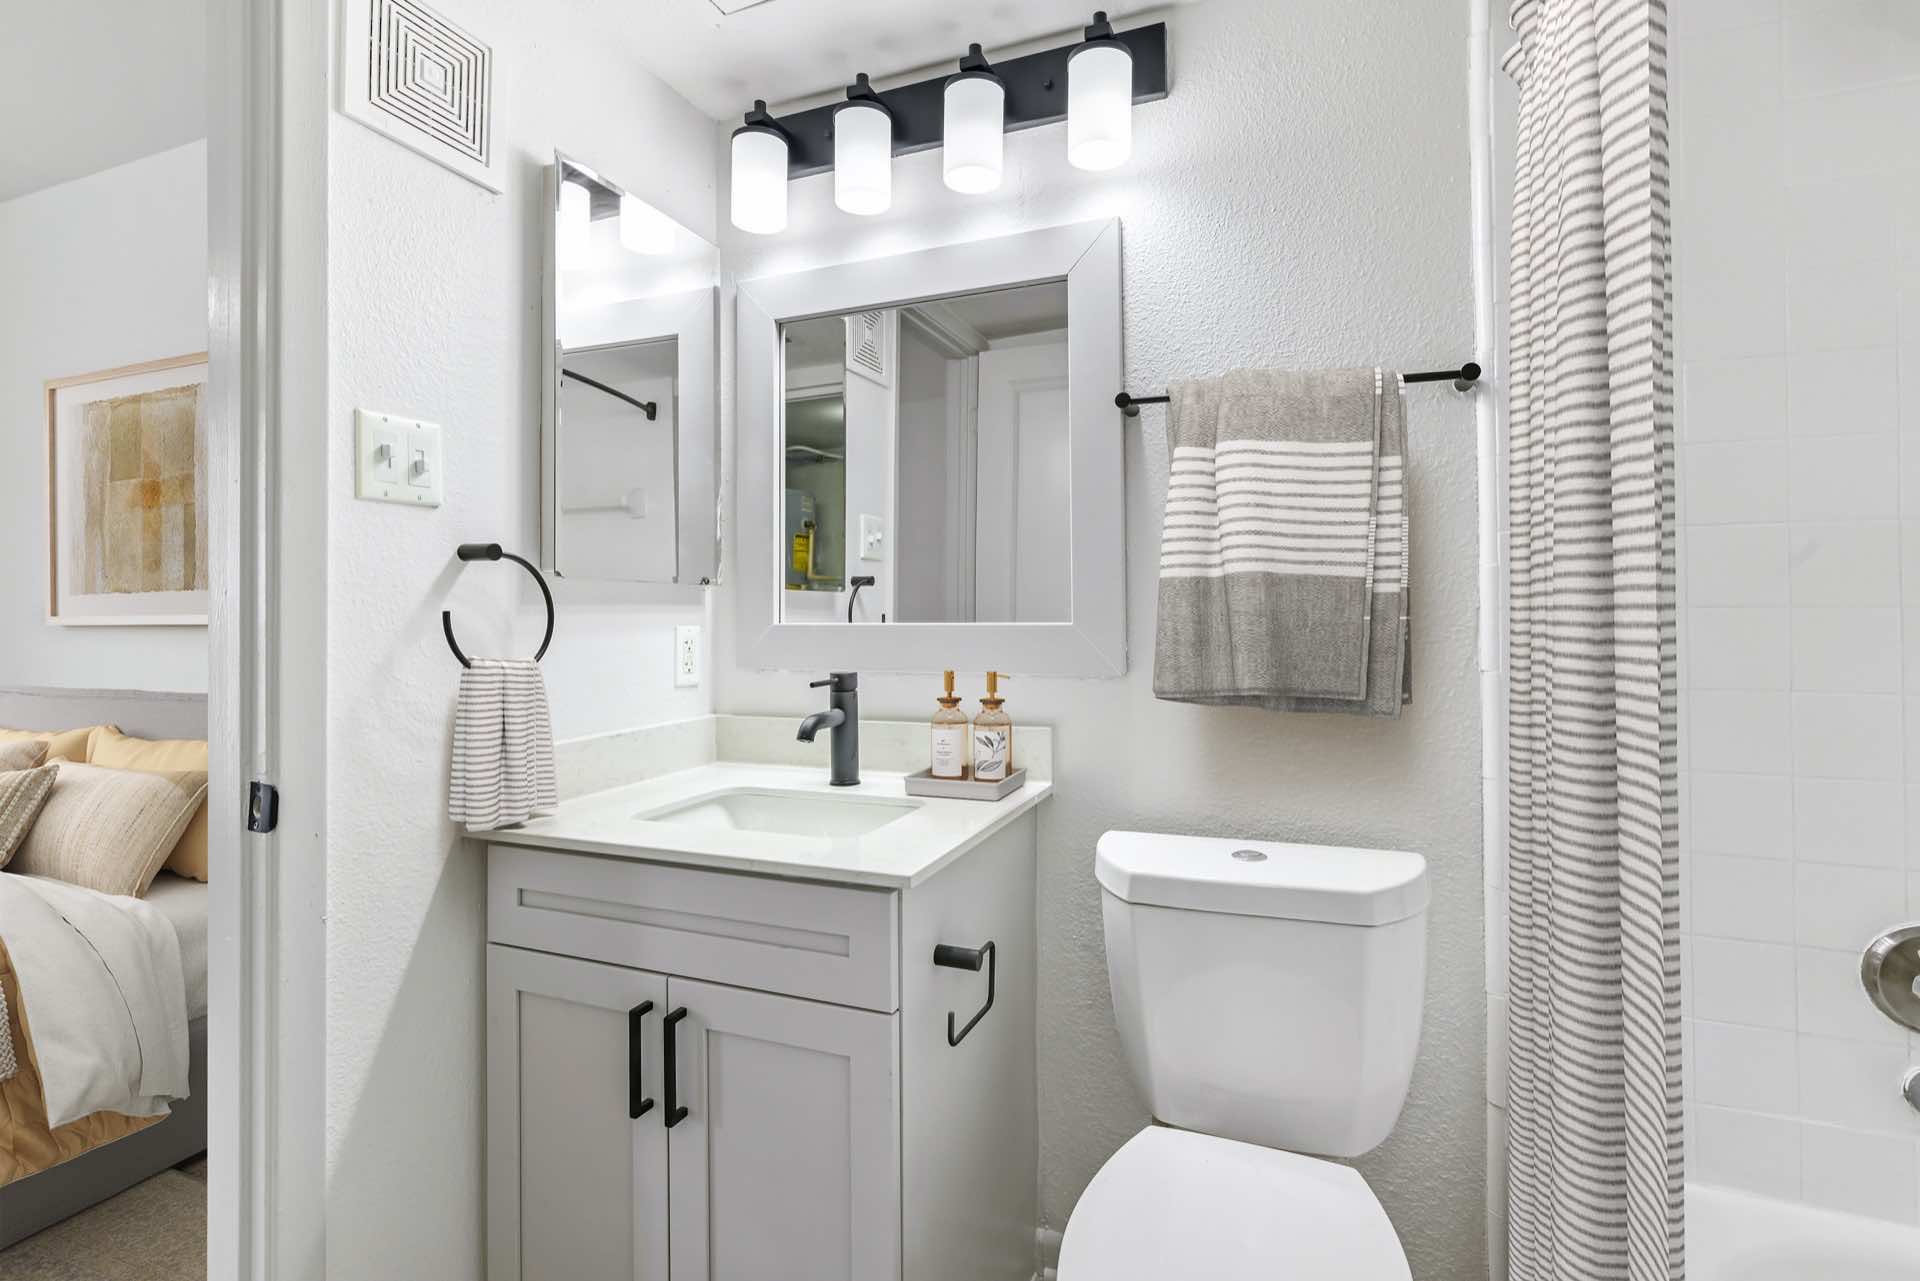 updated bathroom with modern lighting